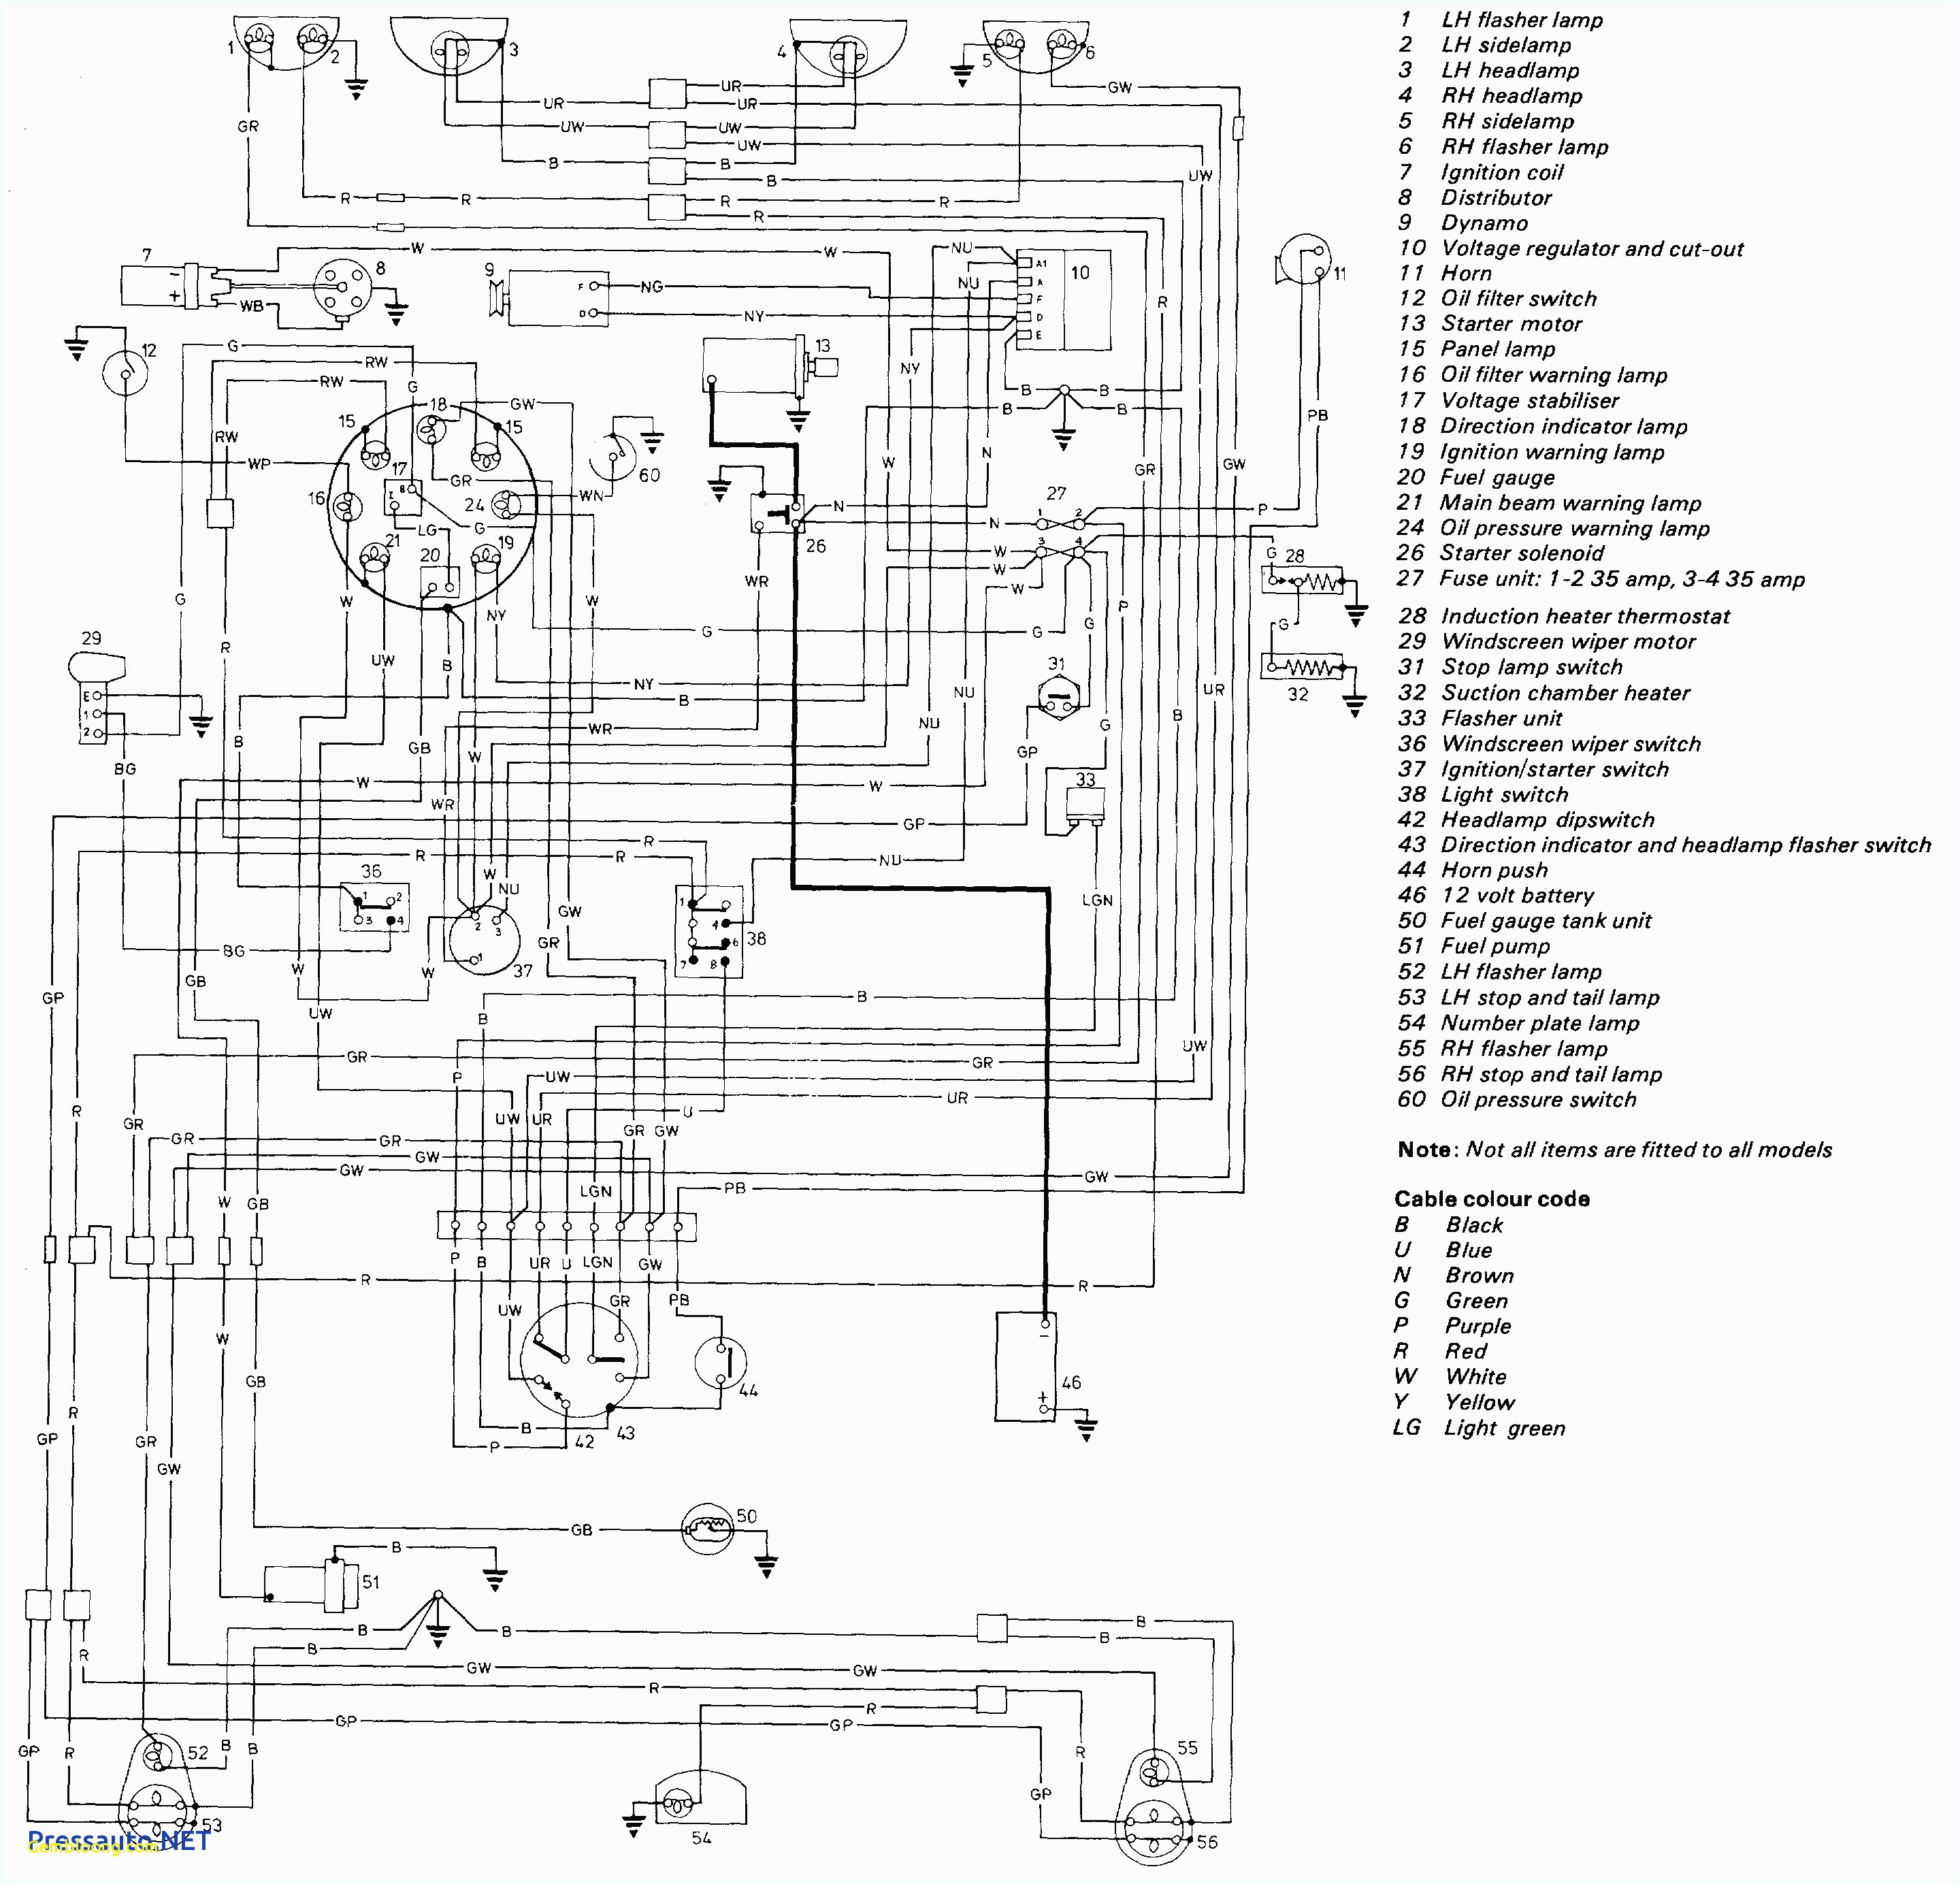 download bmw e36 dme wiring diagram e46 wiring diagram e46 dimensions z8 wiring diagram e34 wiring of bmw e36 dme wiring diagram jpg